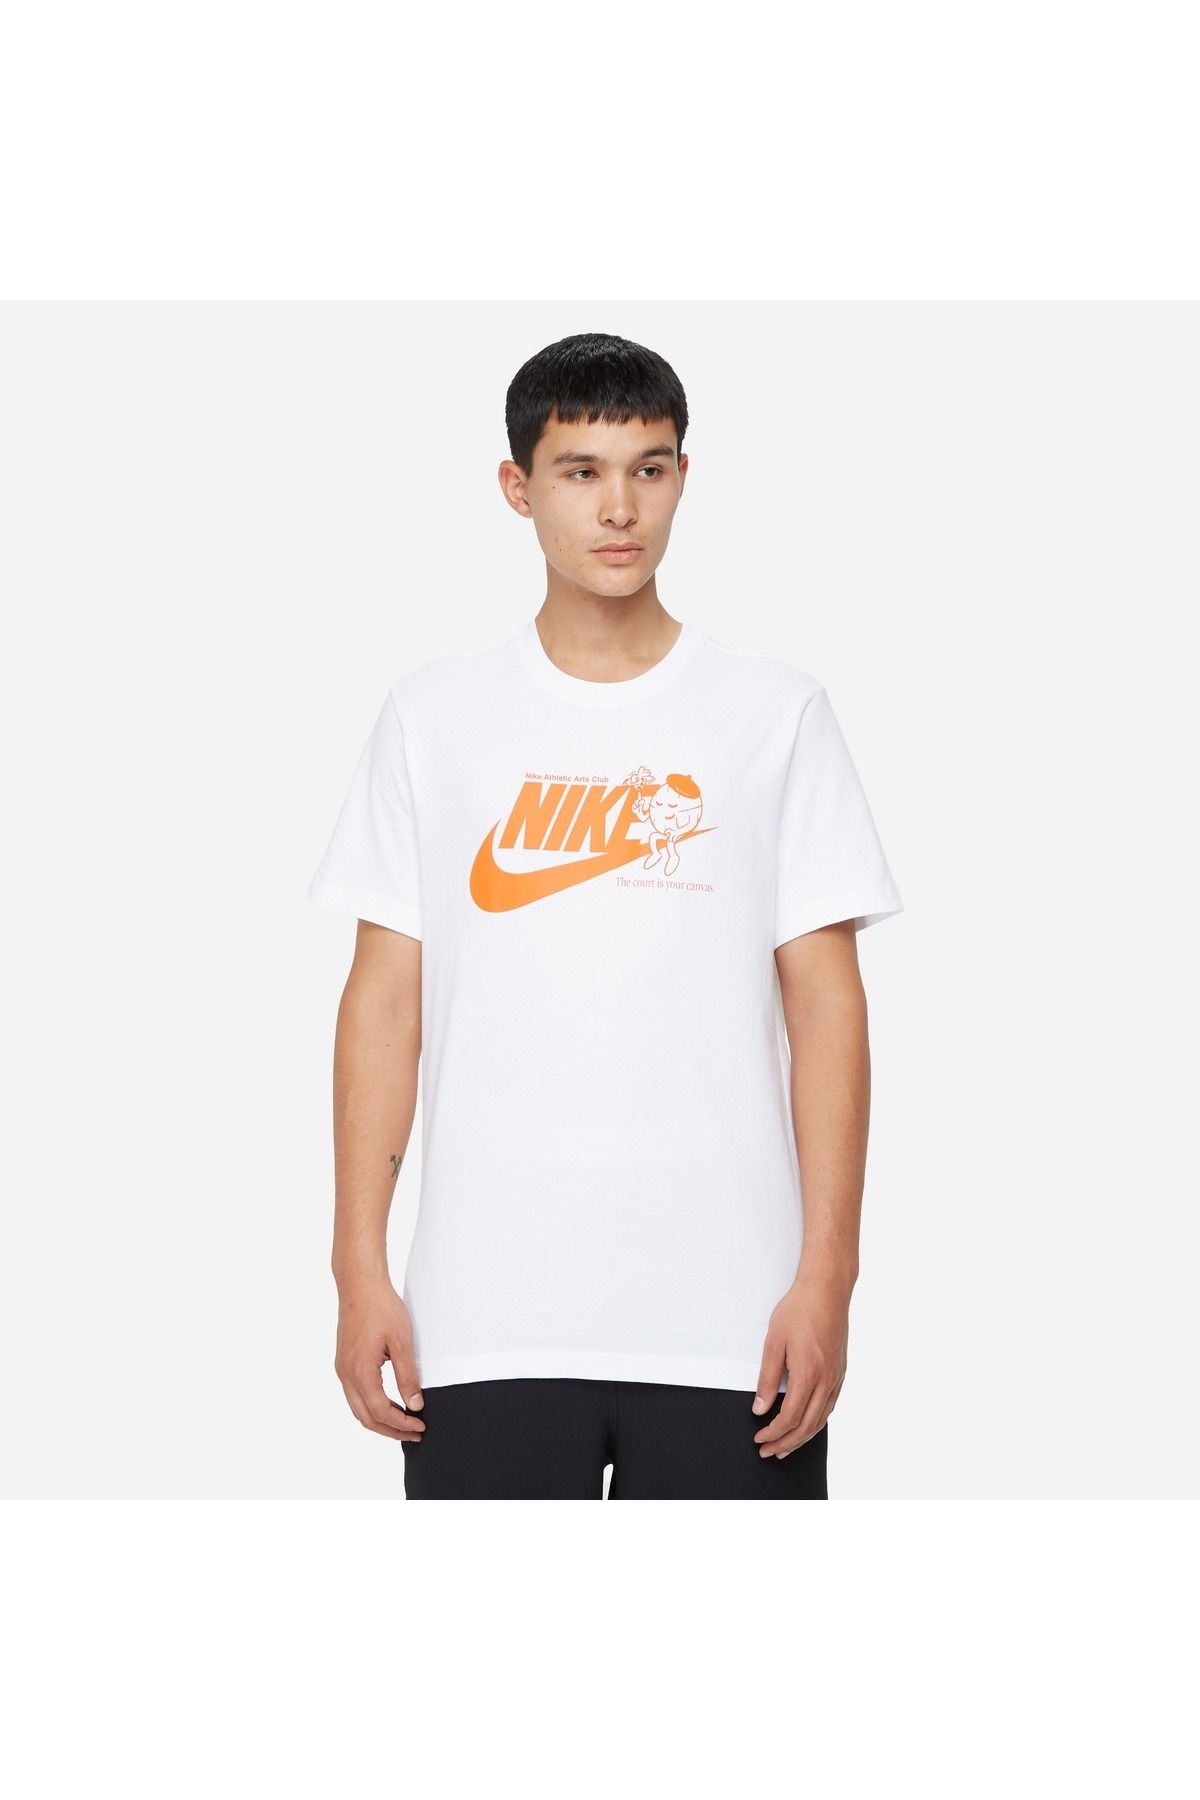 Nike Sports T-Shirt - White - Regular fit - Trendyol